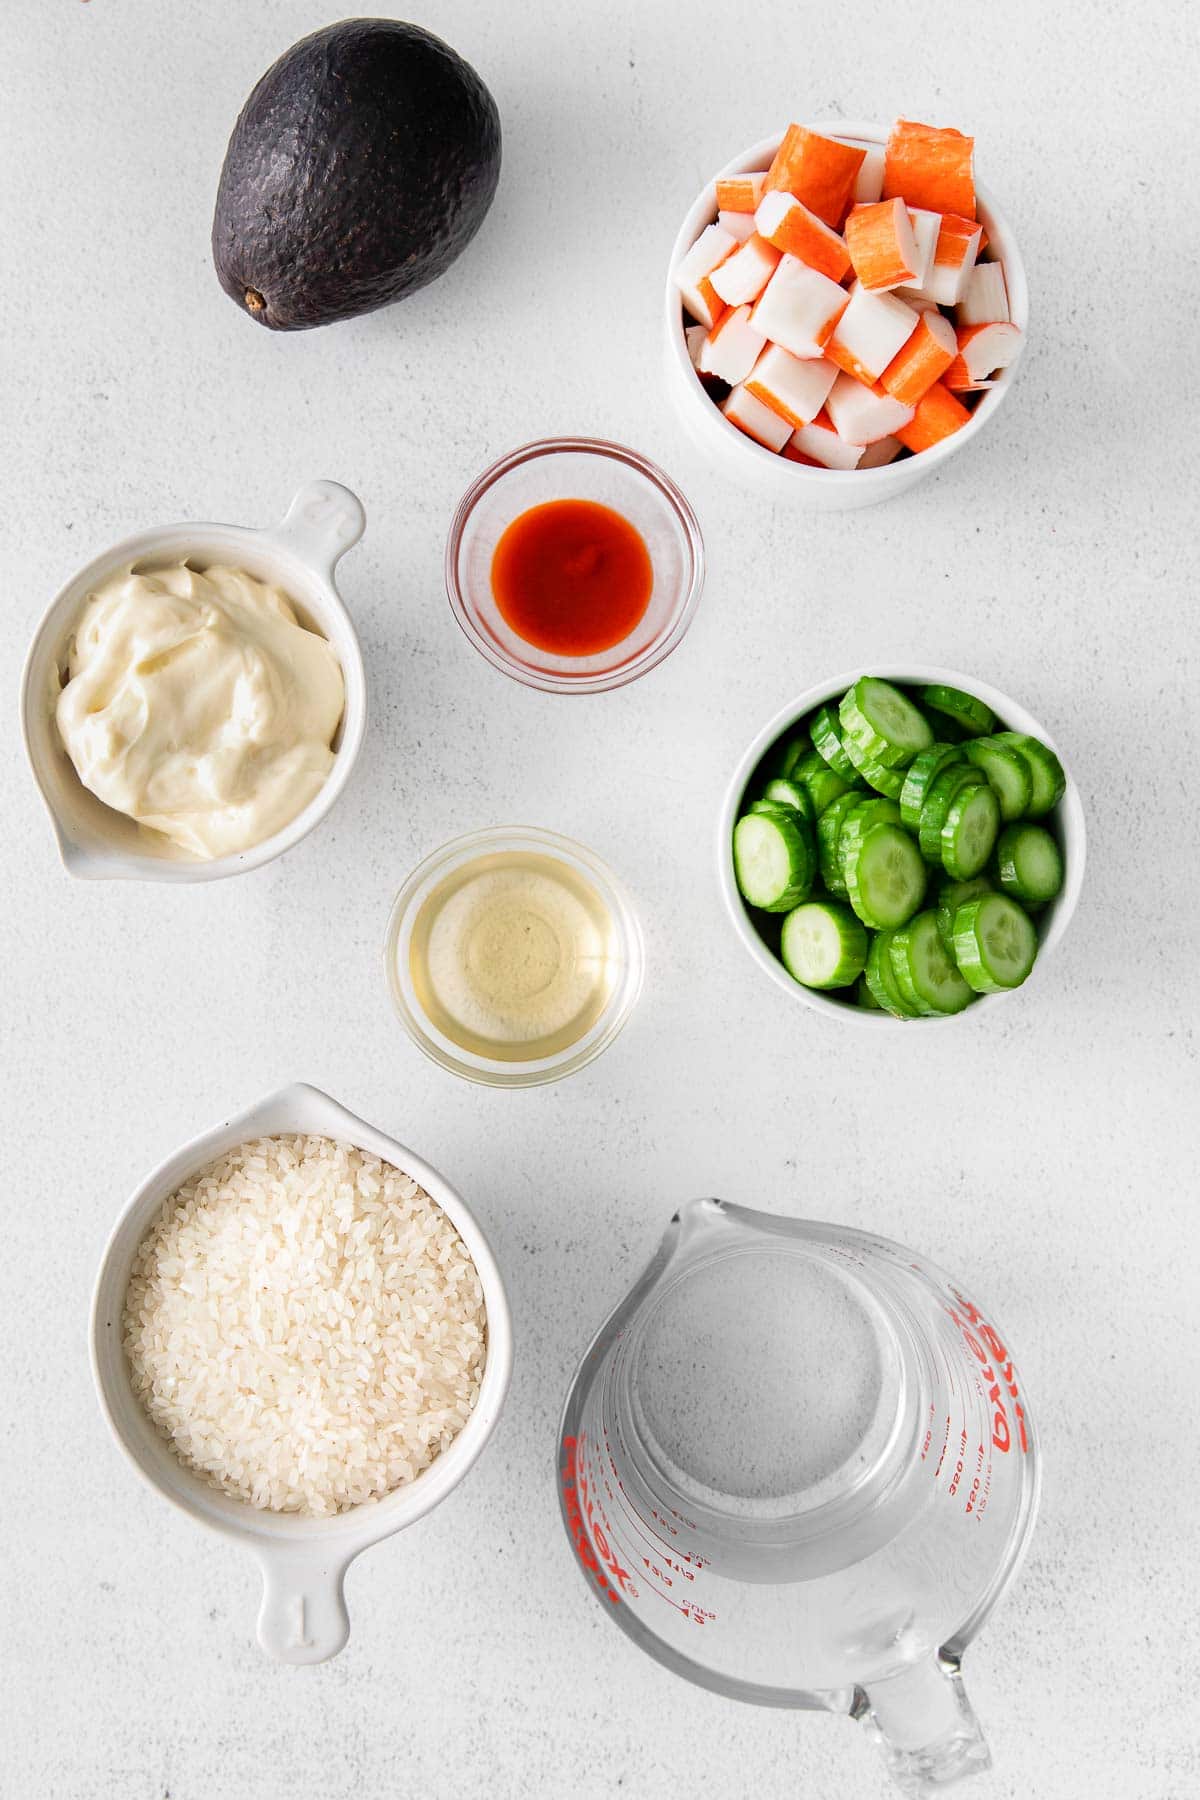 several bowls of ingredients for California roll sushi bowl - rice, cucumber, imitation crab meat, avocado, mayo, sriracha sauce